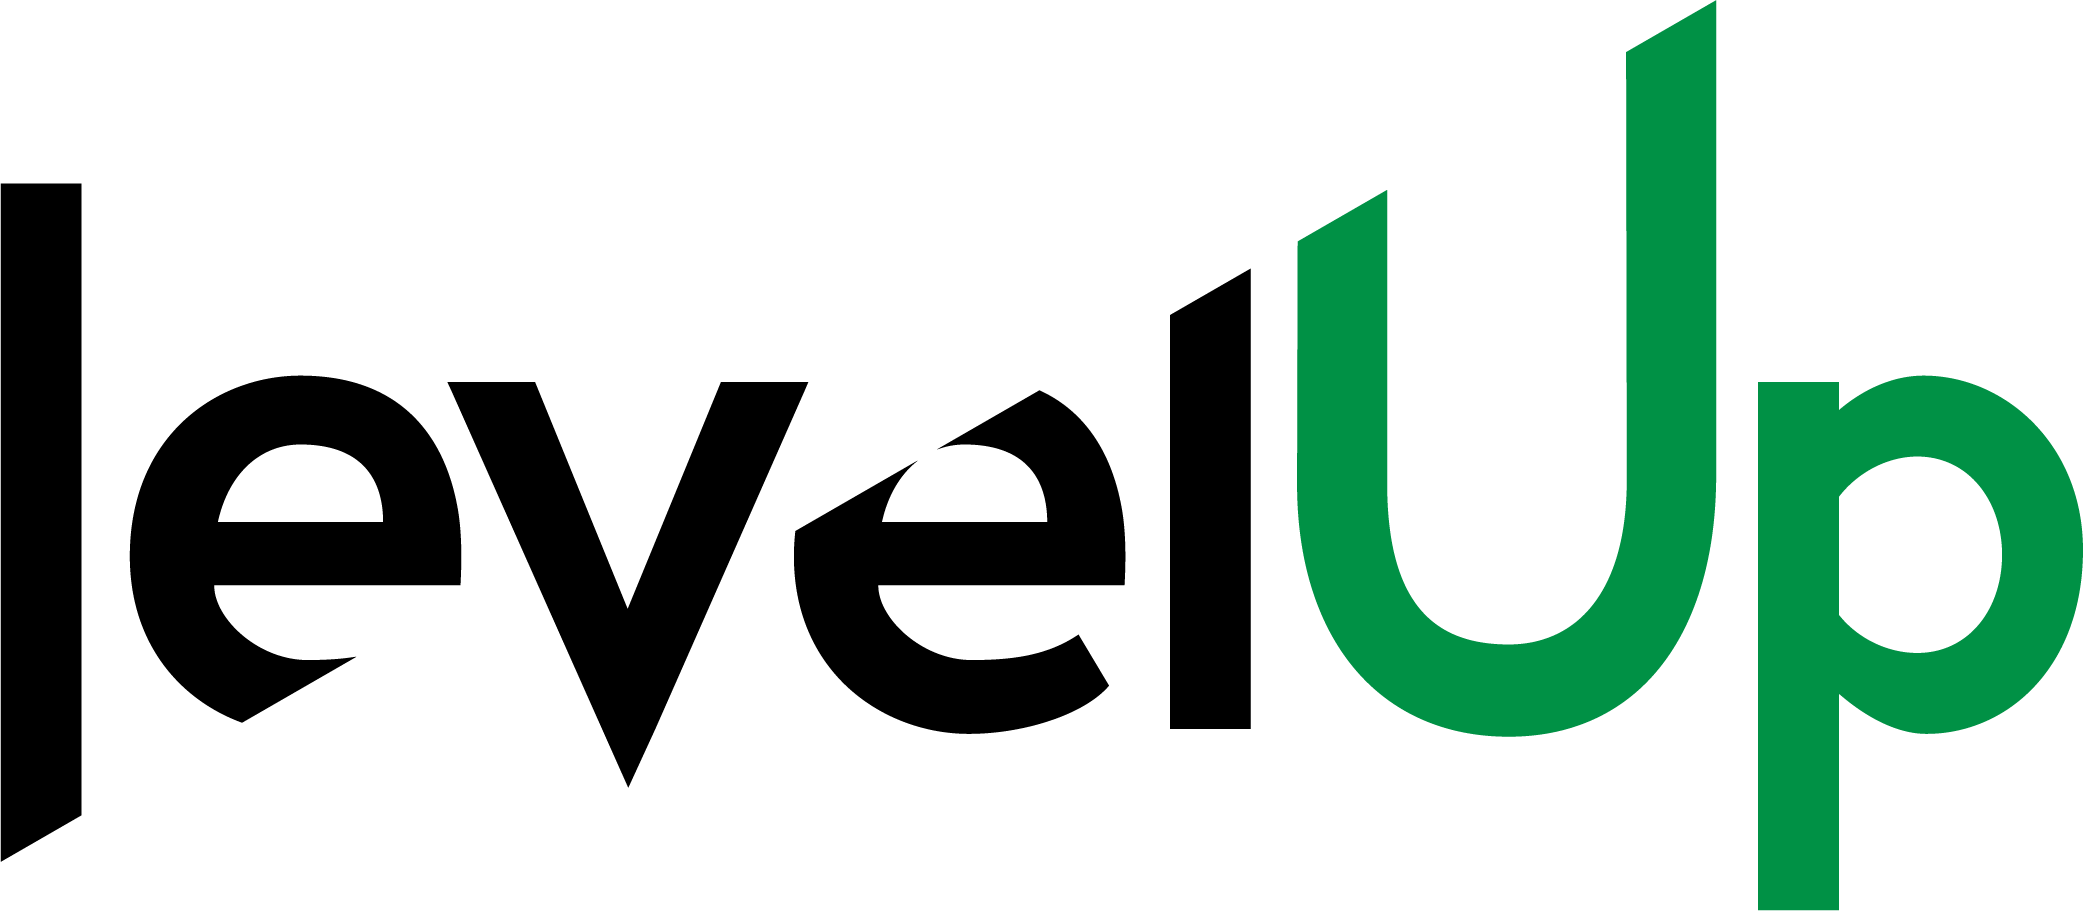 LevelUp Companies' logo